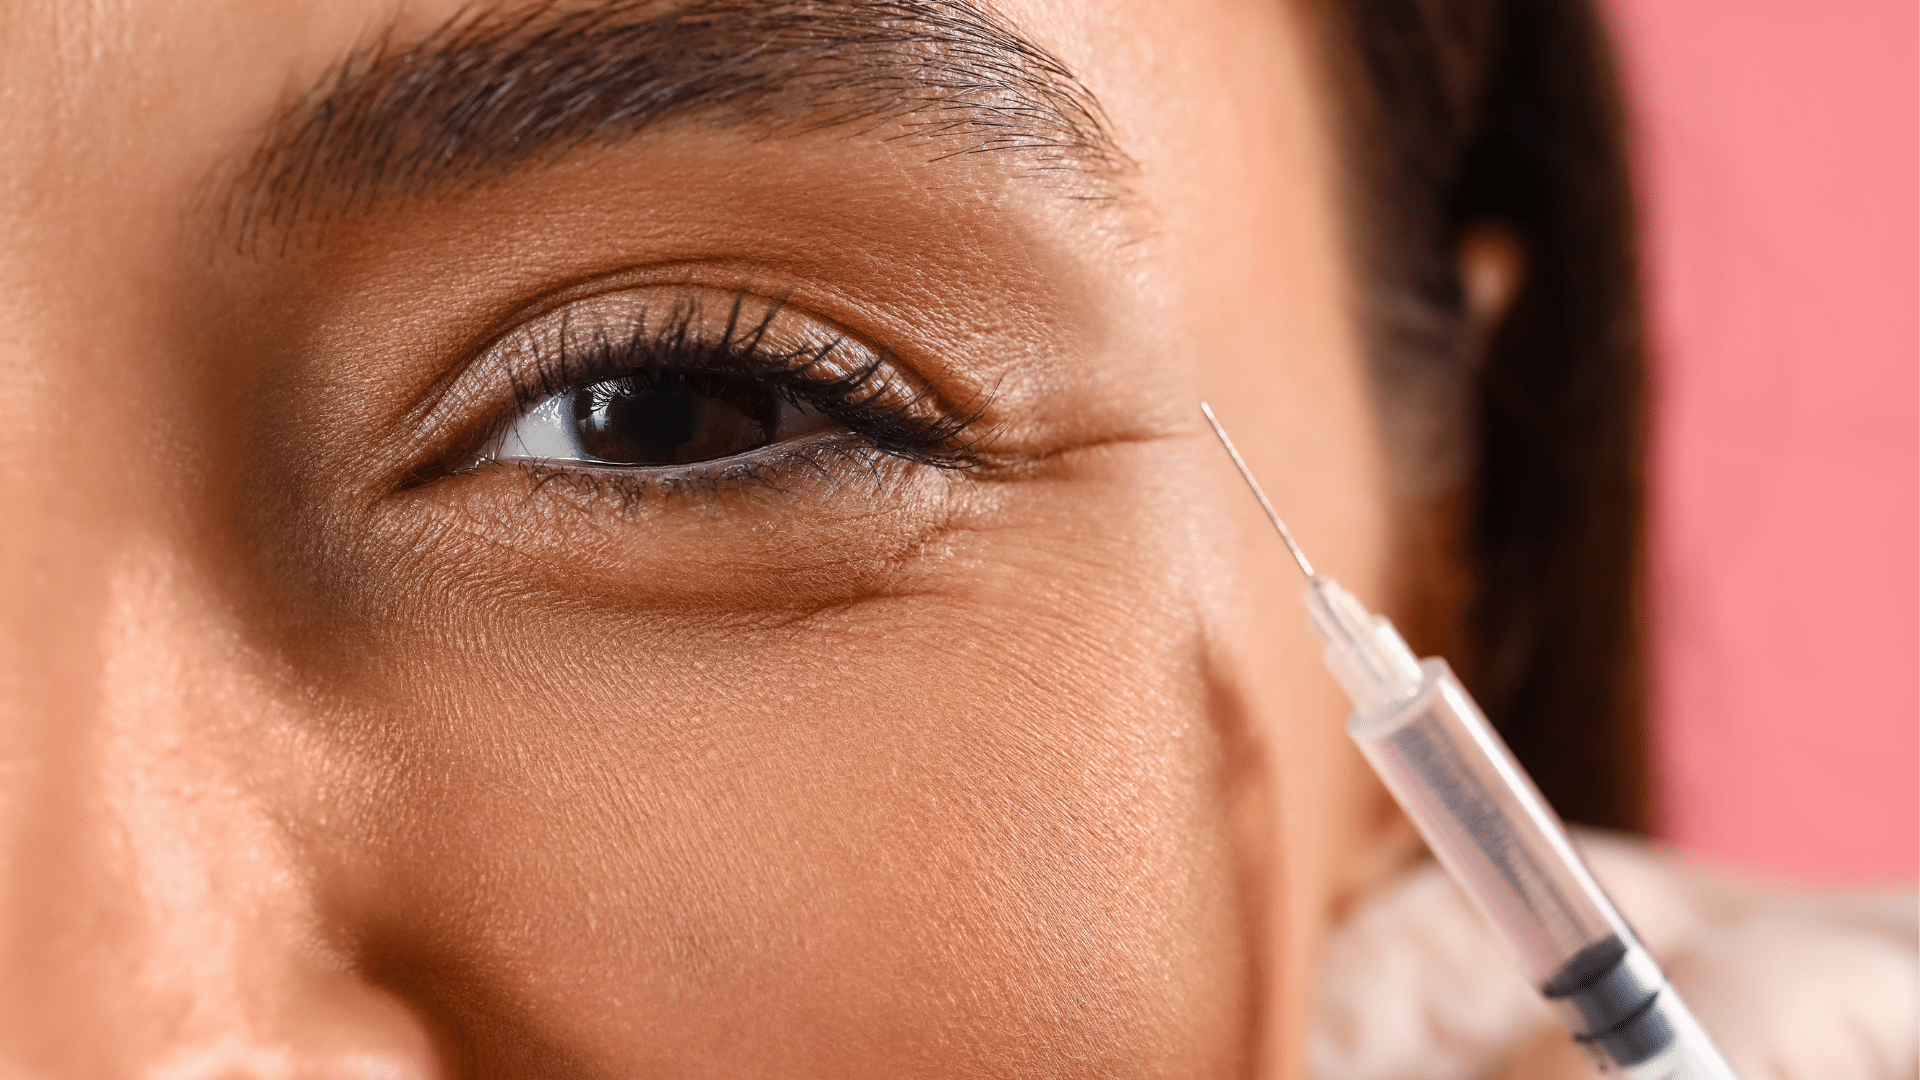 Woman getting eye injection.